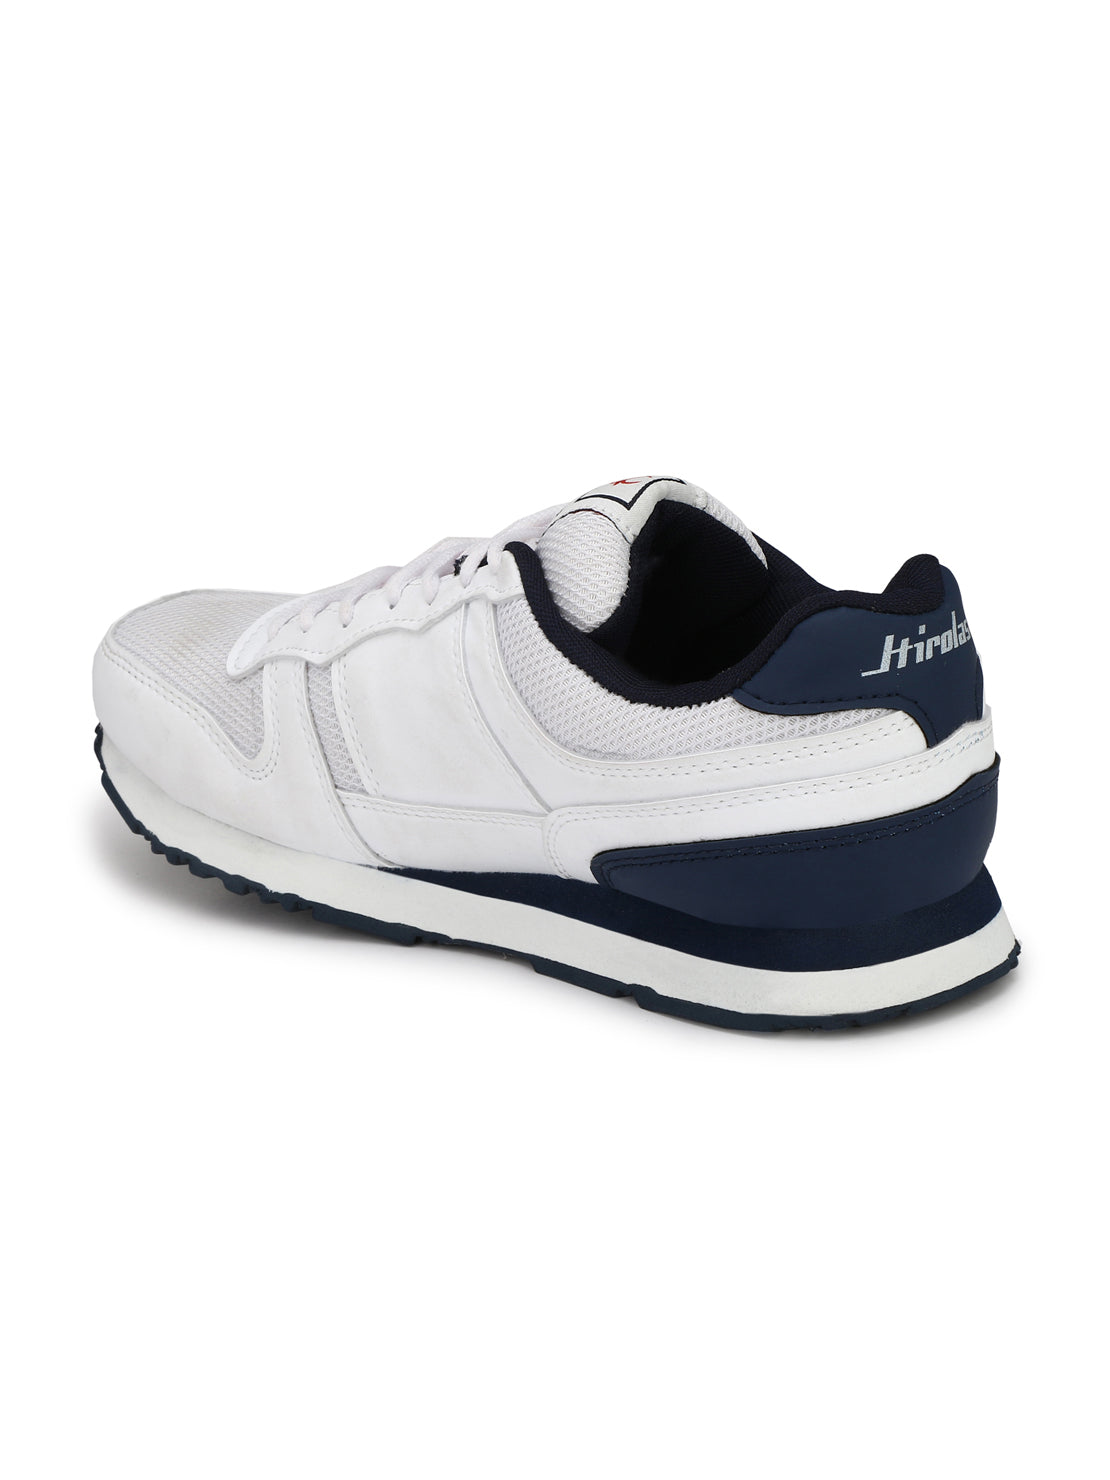 Hirolas® Men's White/Blue Multisports Lace Up Sneaker Sport Shoes (HRL1954WTB)